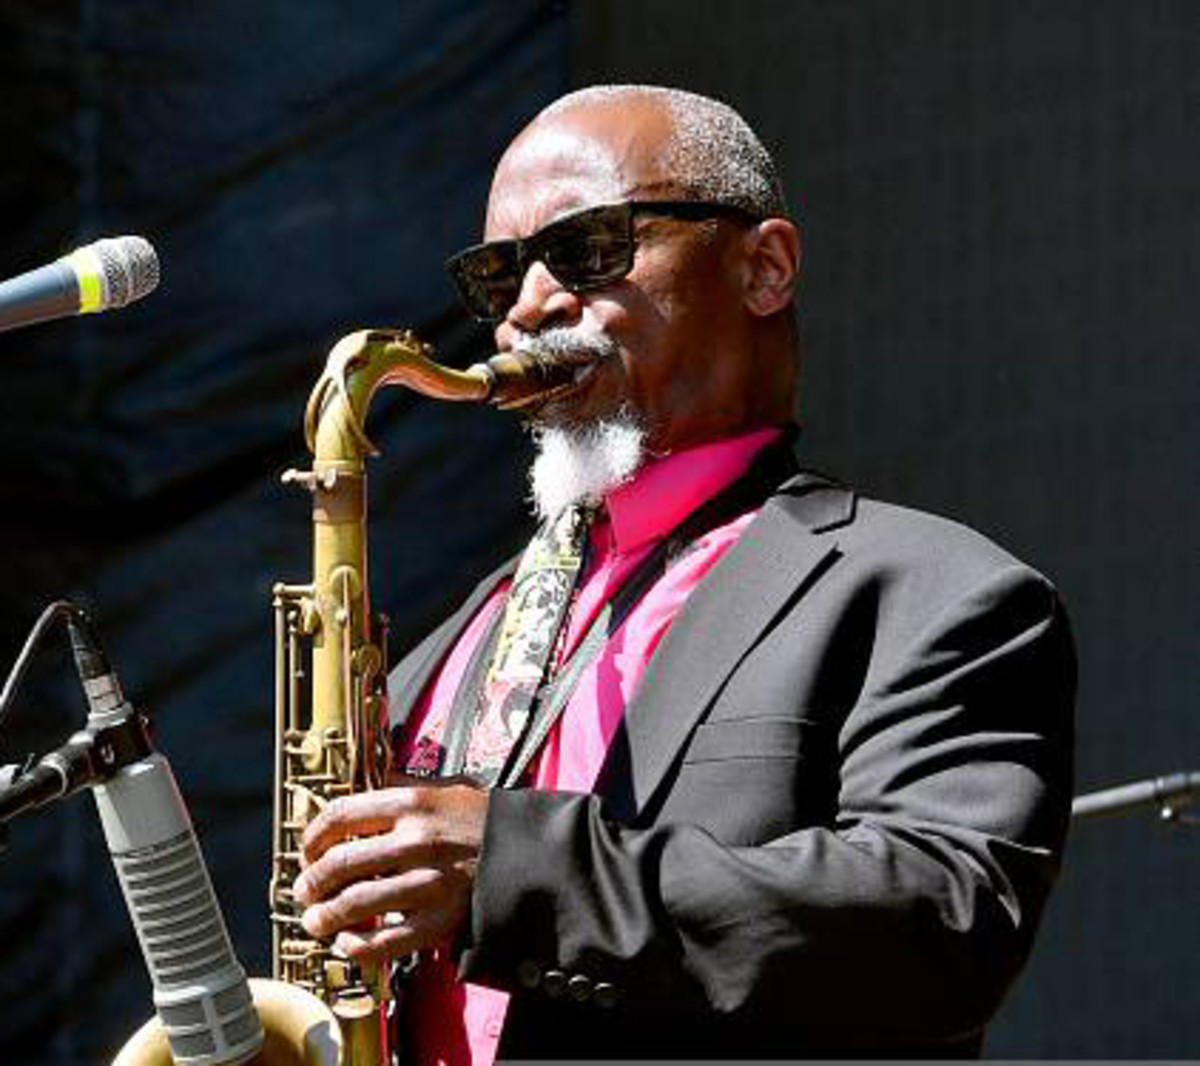 Saxophonist Karl Denson. Photo by Erika Goldring/Getty Images for Pilgrimage Music & Cultural Festival